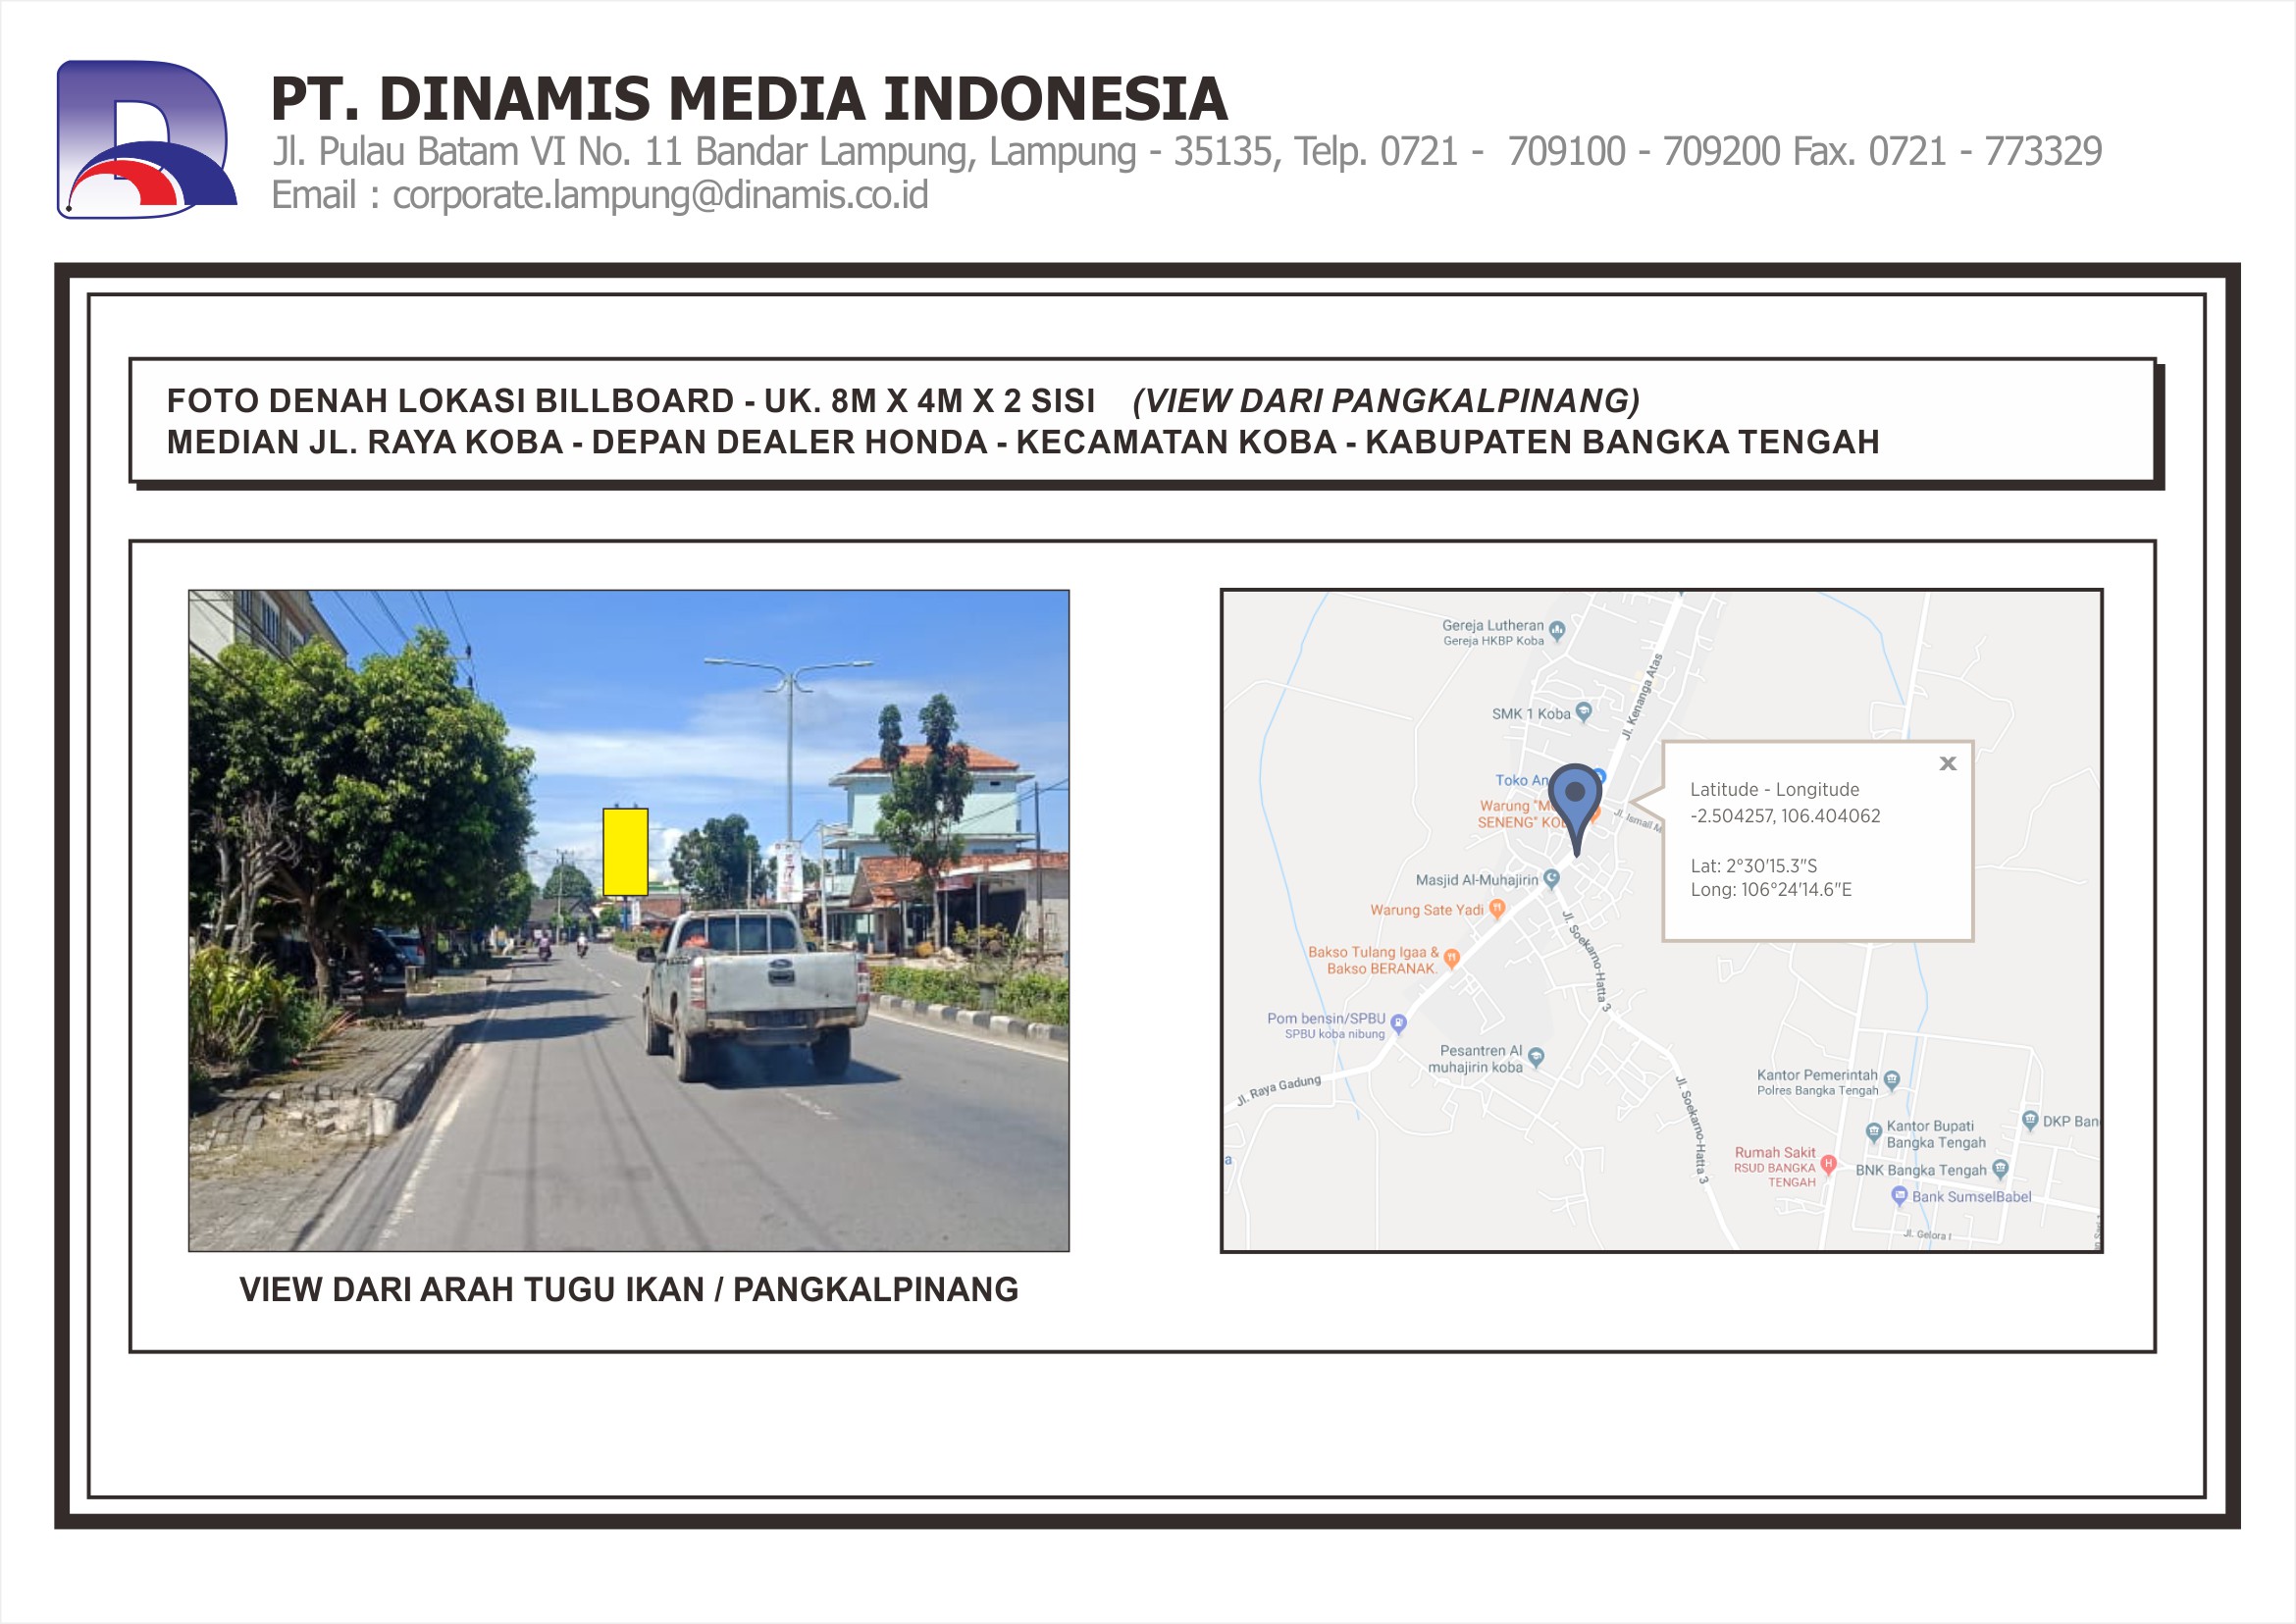 [Billboard] Median Jl. Raya Koba Dealer Honda Koba Bangka Tengah